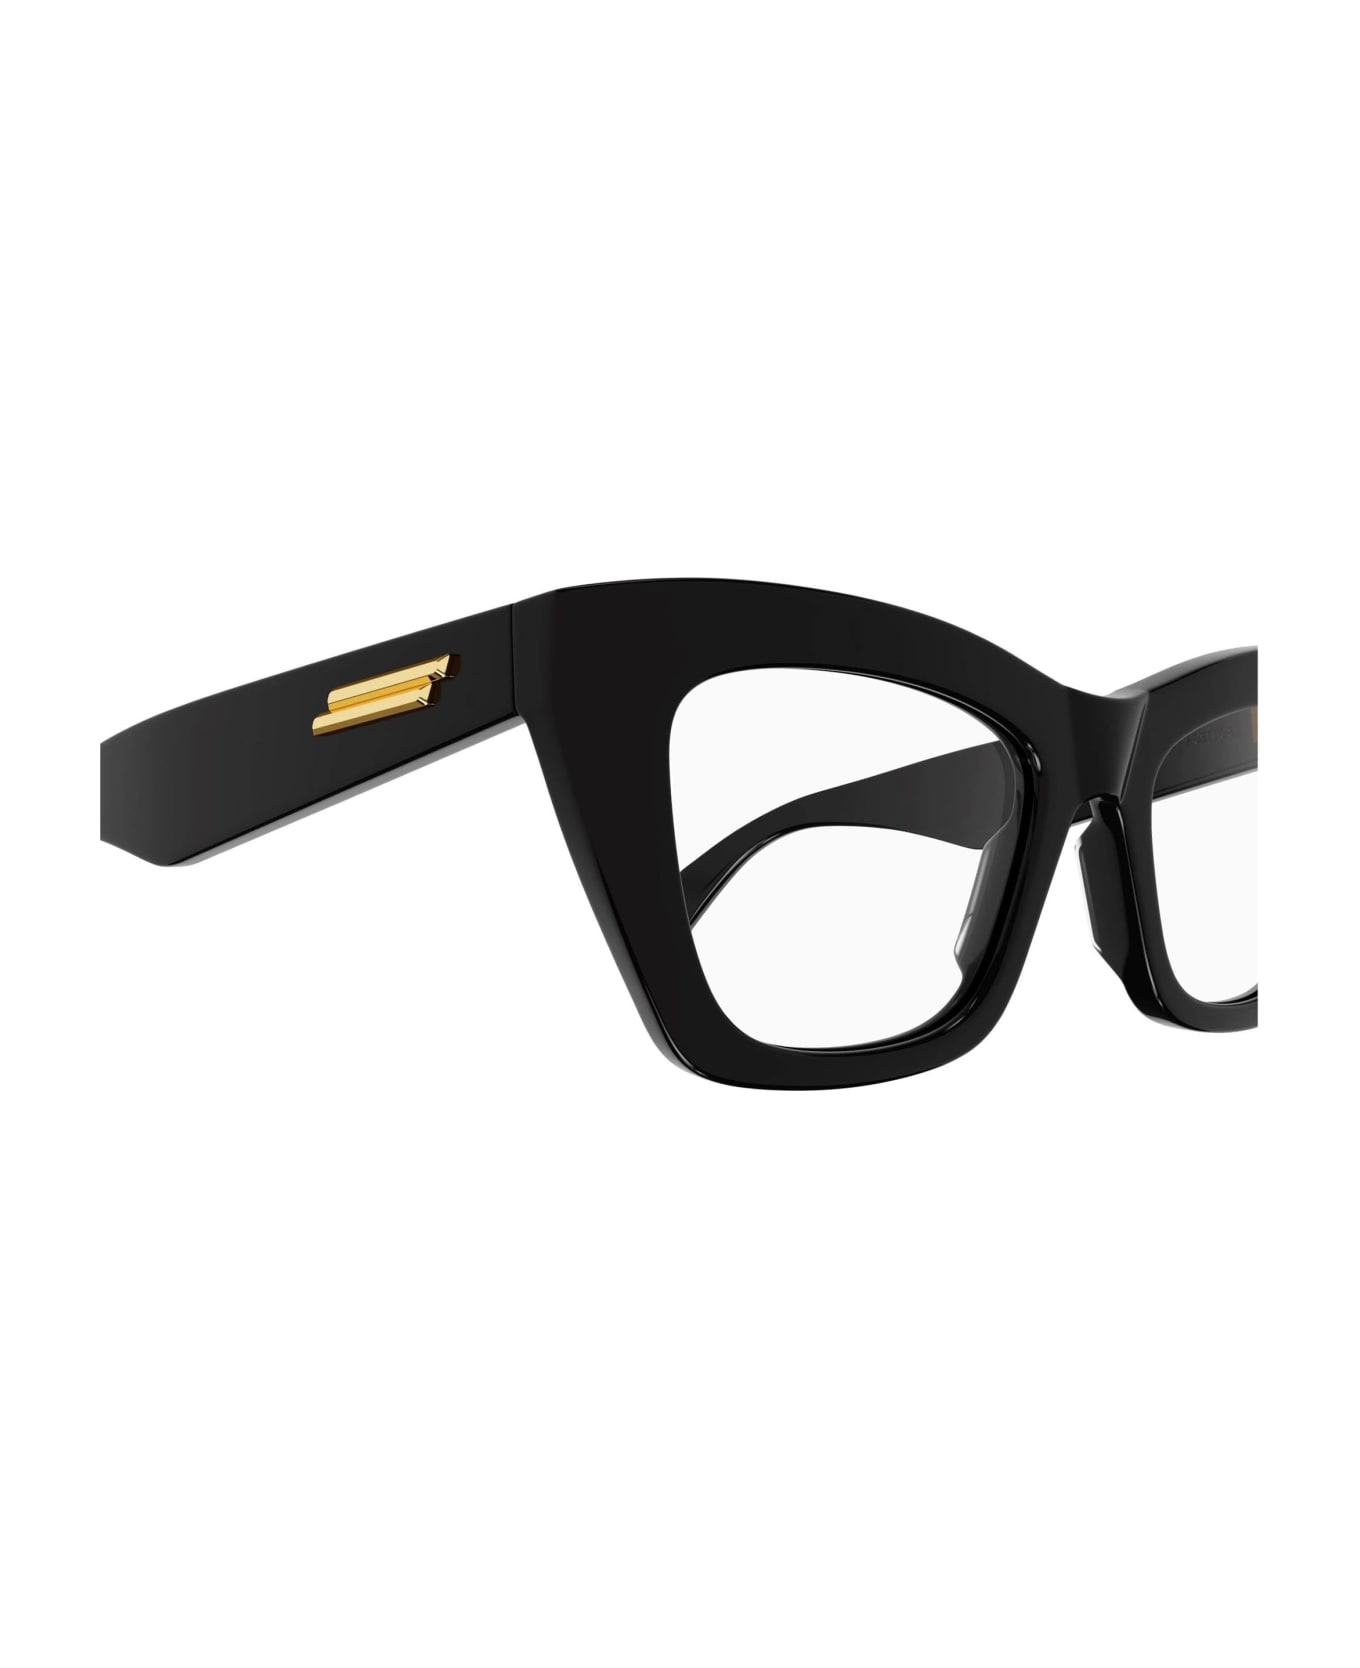 Bottega Veneta Eyewear Bv1215o-001 - Black Glasses - Black